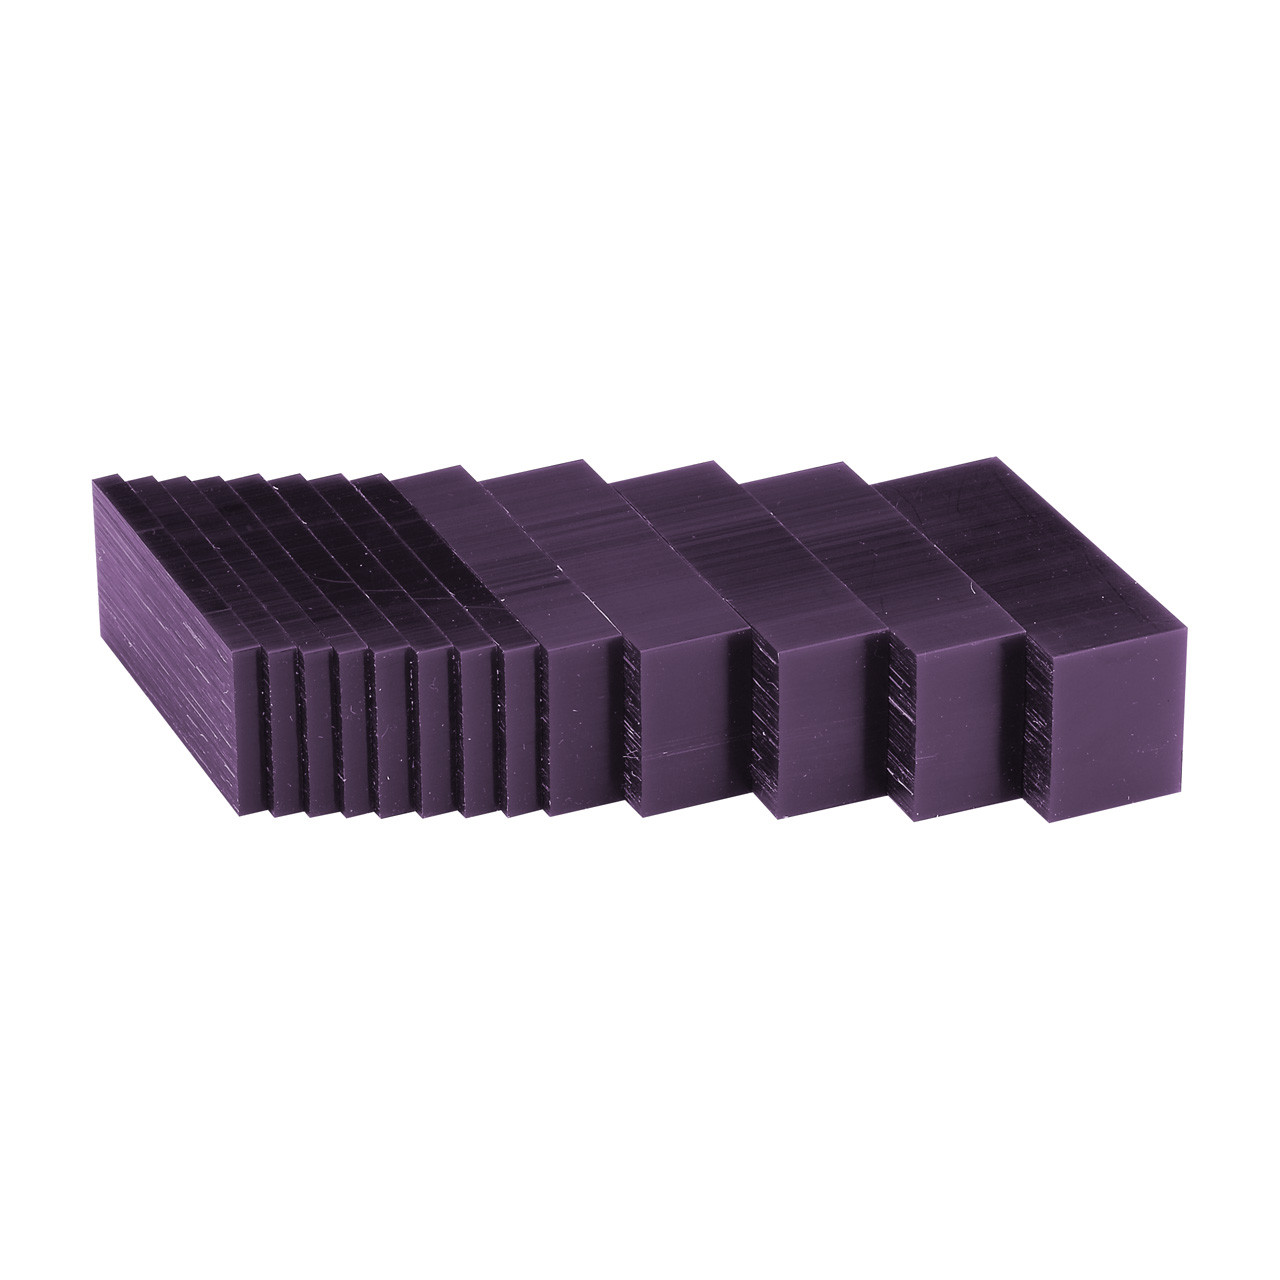 Matt™ Carving Wax Blocks & Slices - 1 lb. Slices Purple